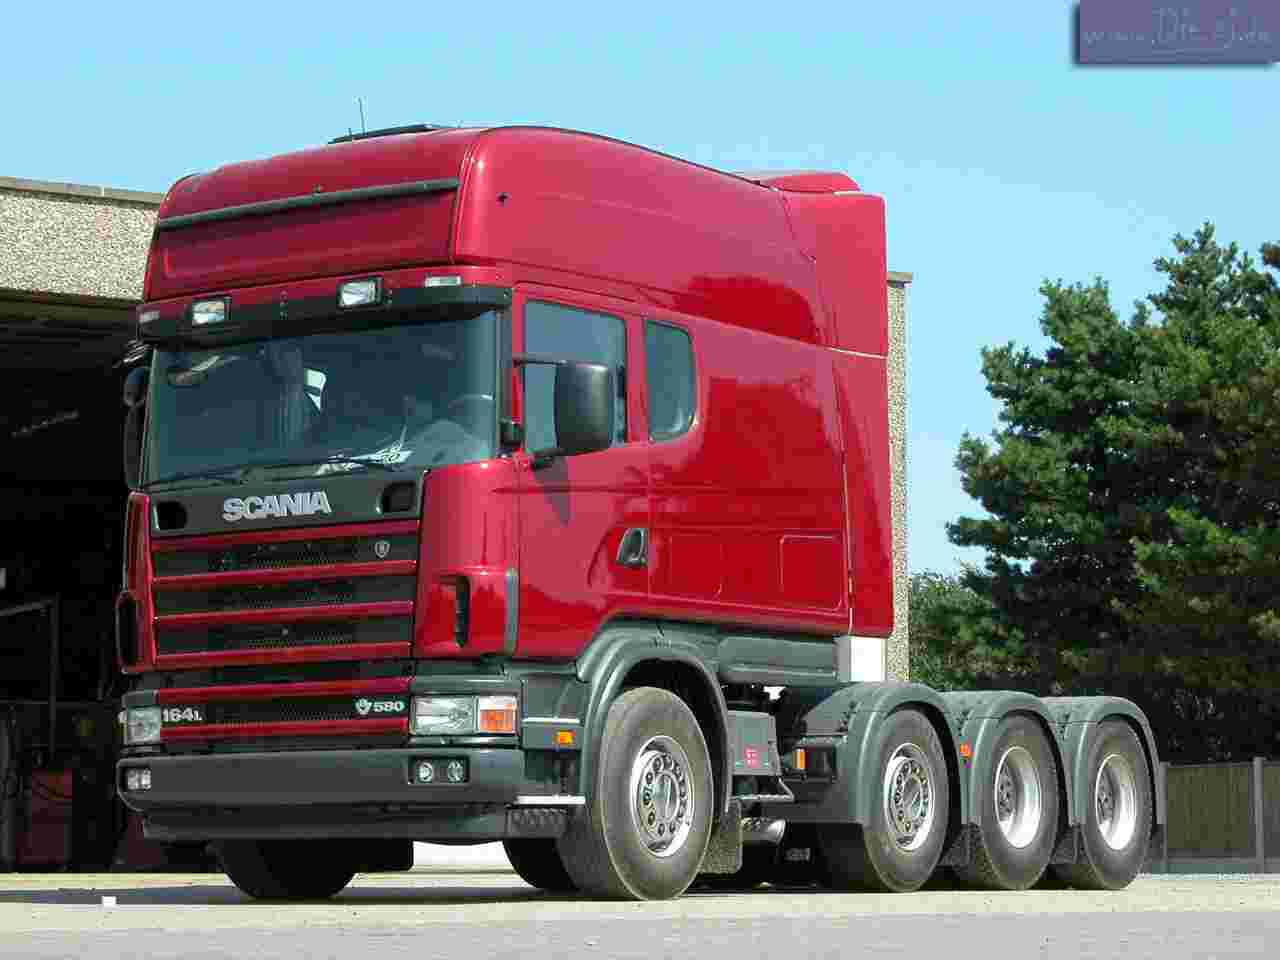 Scania R164l Wallpaper Trucks Buses